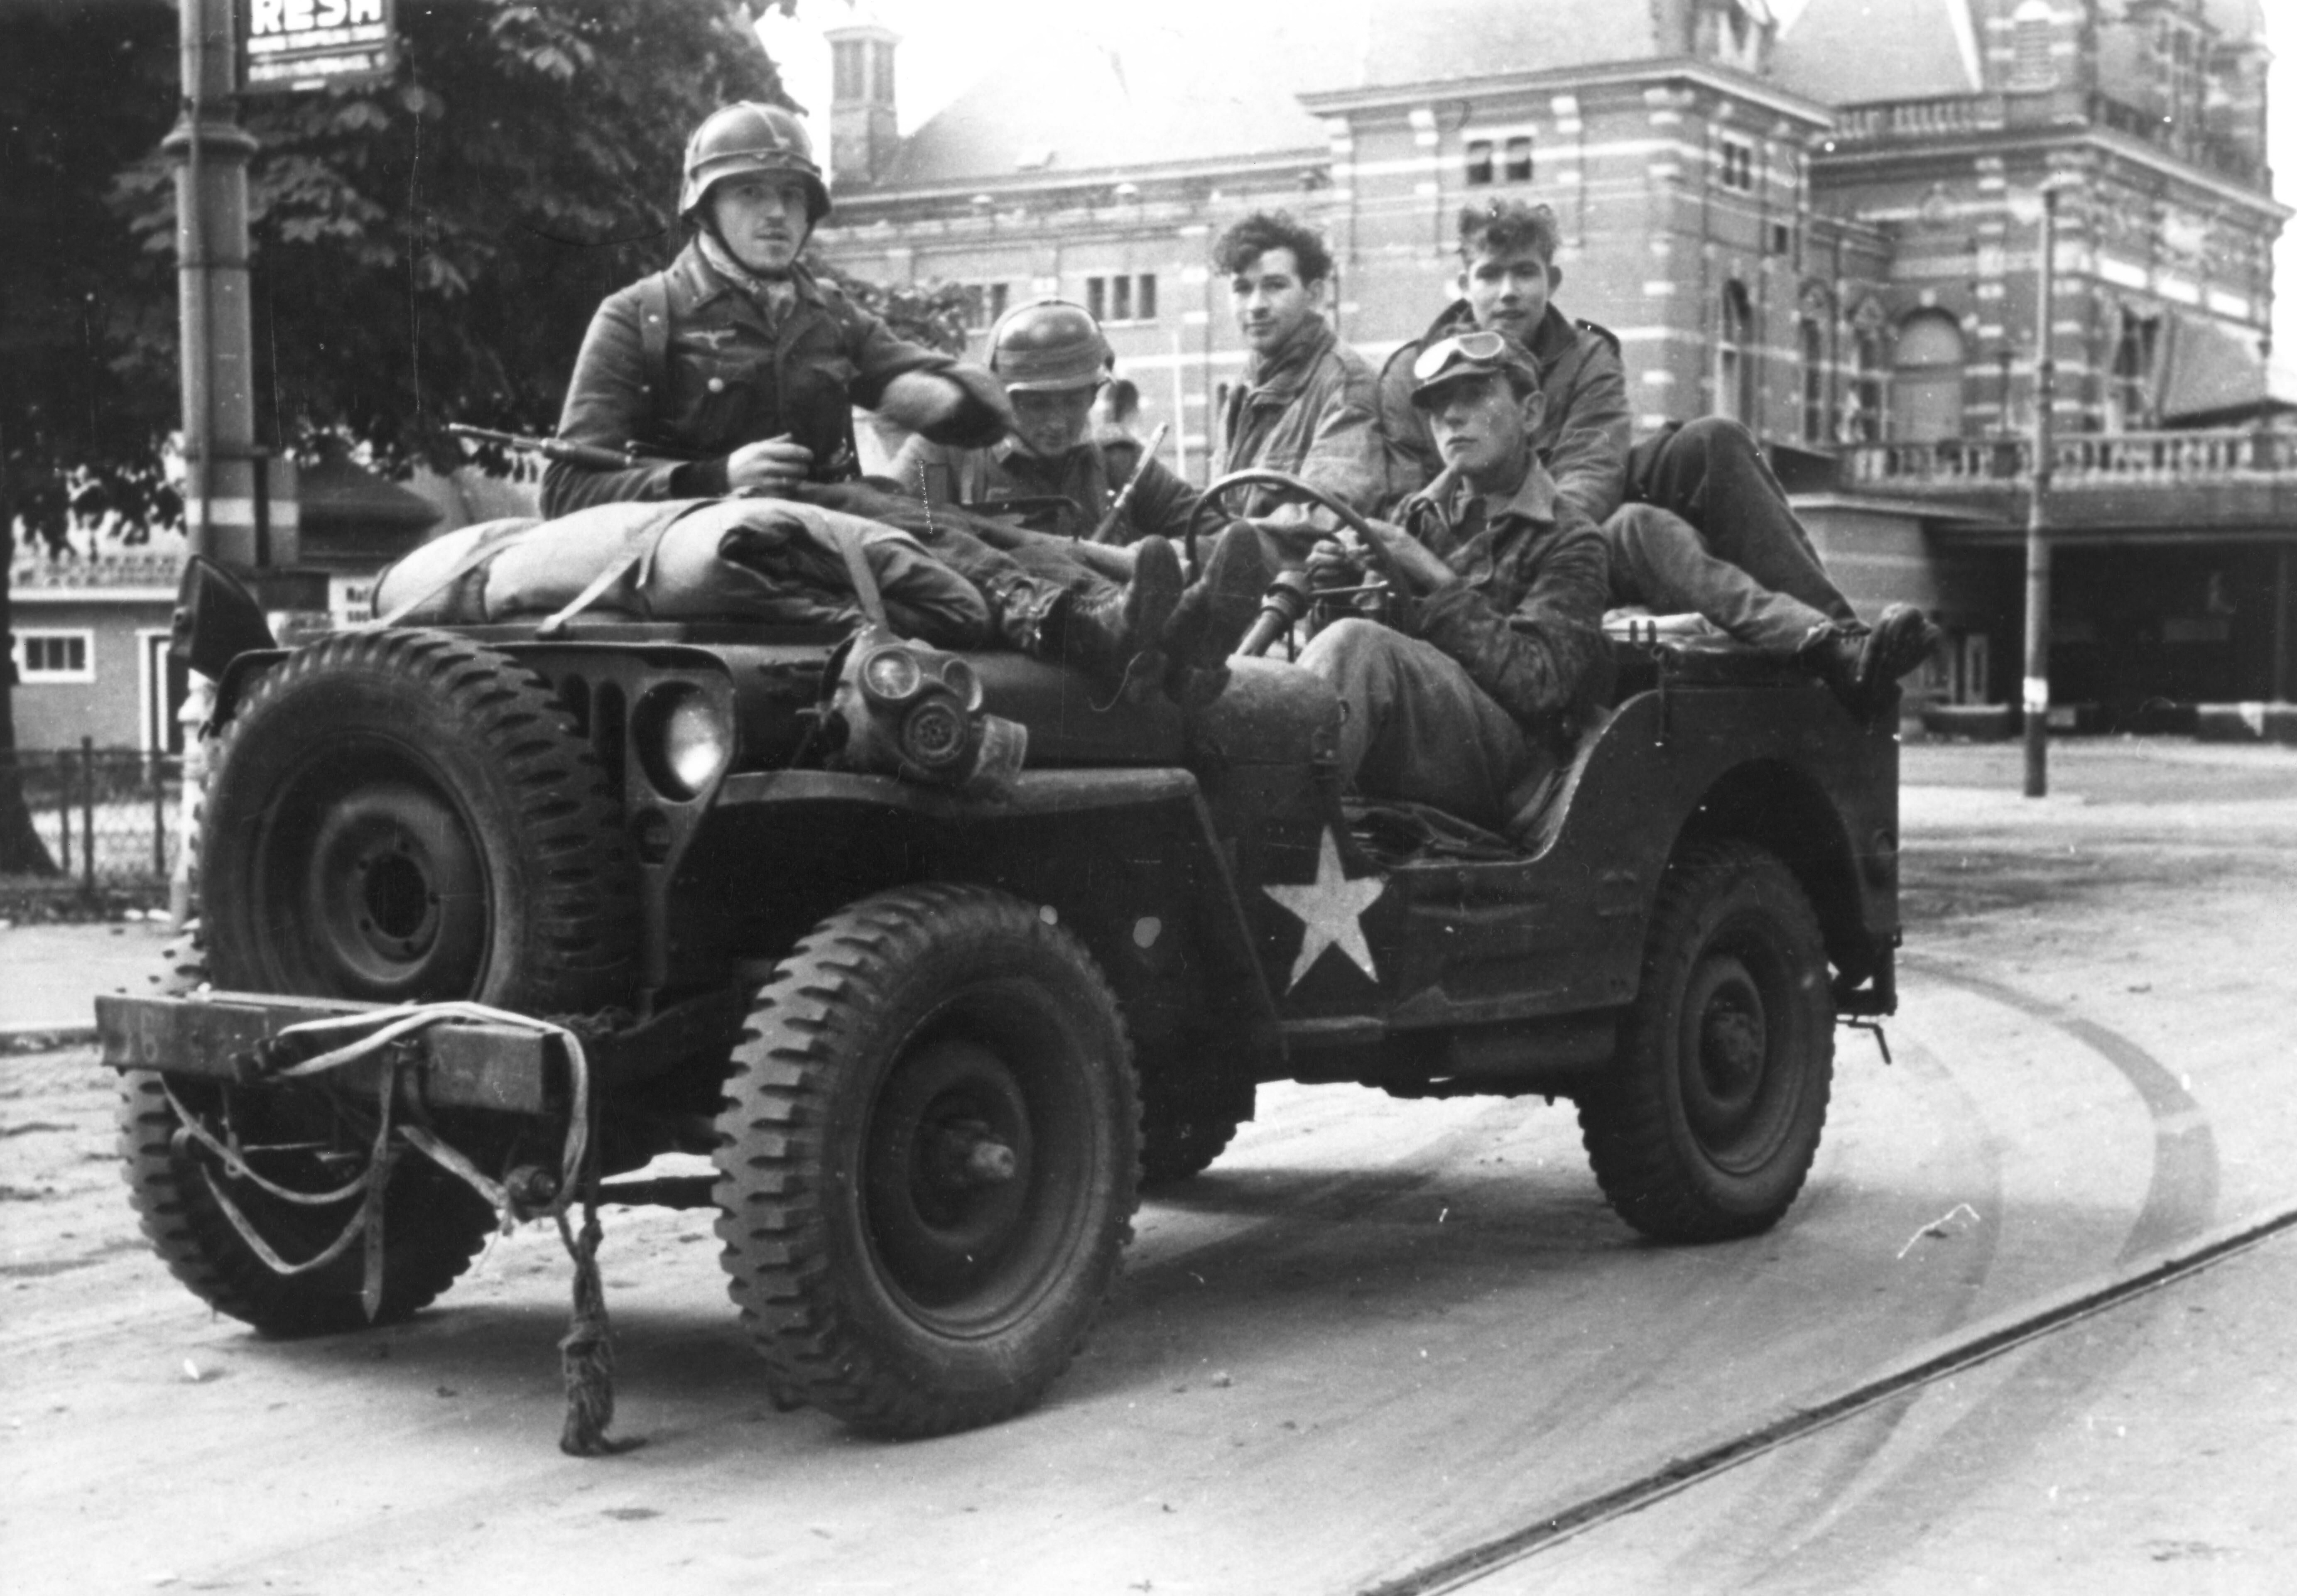 Duitse militairen in een buitgemaakte Amerikaanse jeep in Arnhem